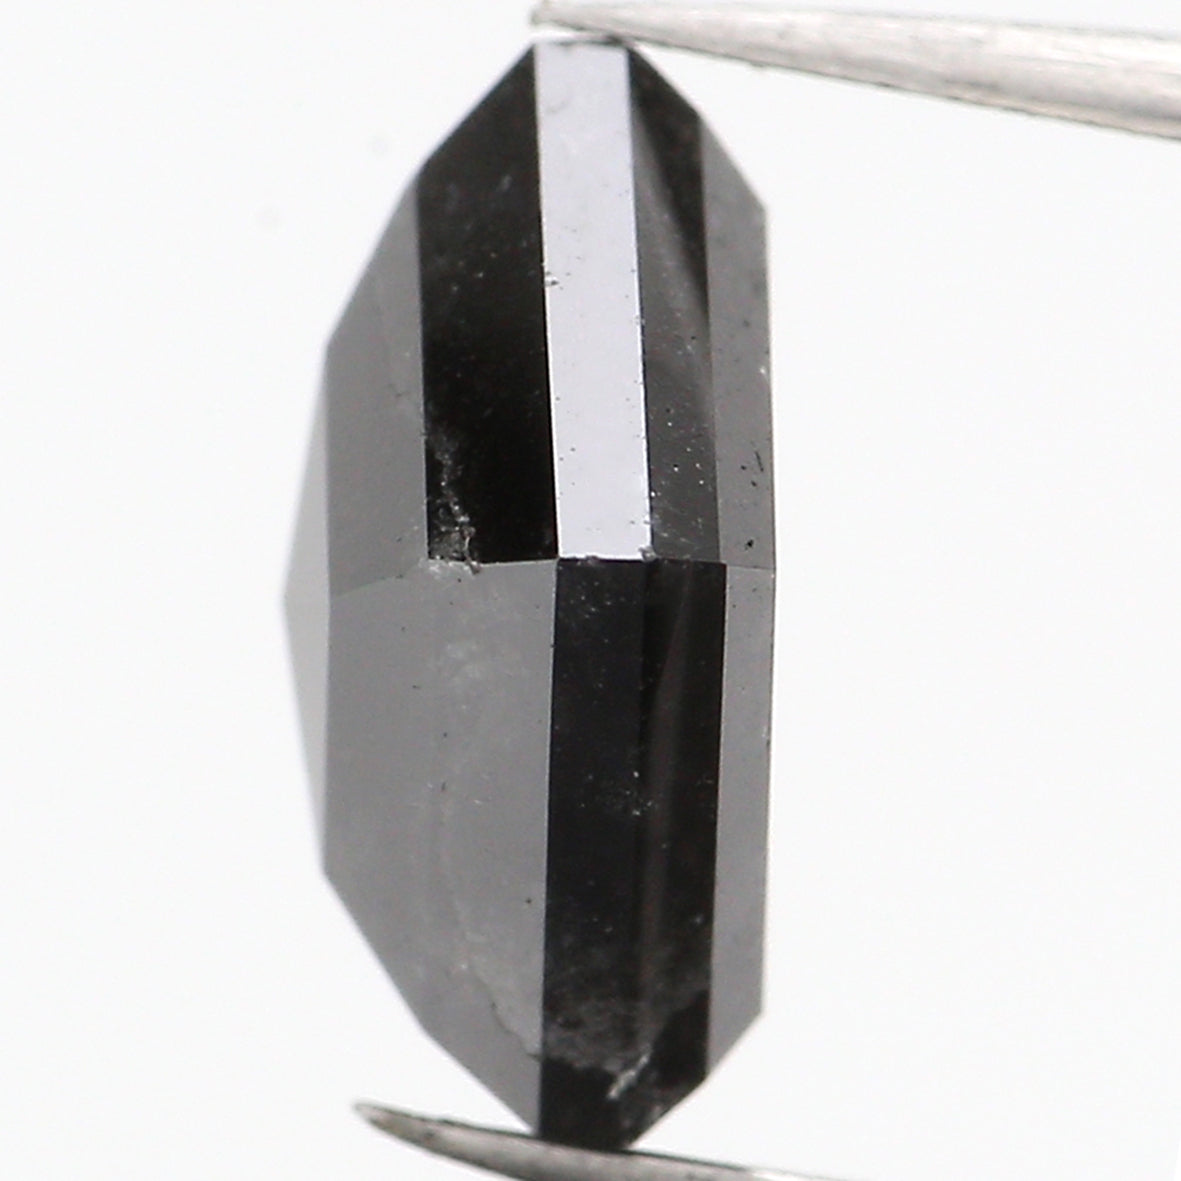 2.28 CT Natural Loose Diamond, Pentagon Cut Diamond, Black Diamond, Black Loose Pentagon Diamond, Rose Cut Diamond, Rustic Diamond KDL870